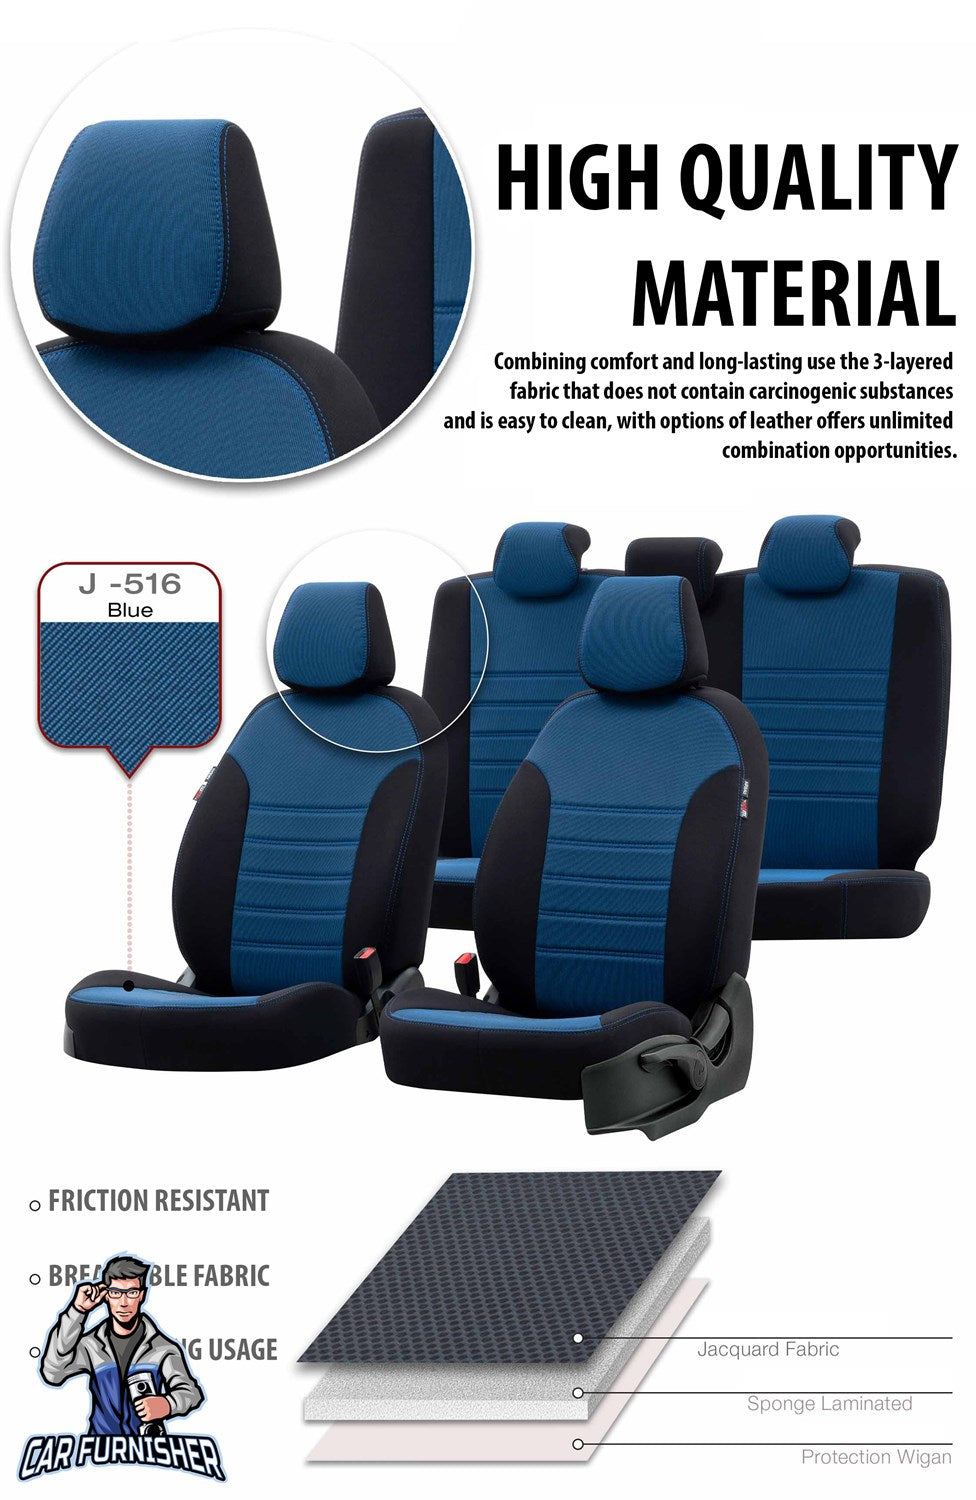 Toyota Proace City Seat Covers Original Jacquard Design Light Gray Jacquard Fabric